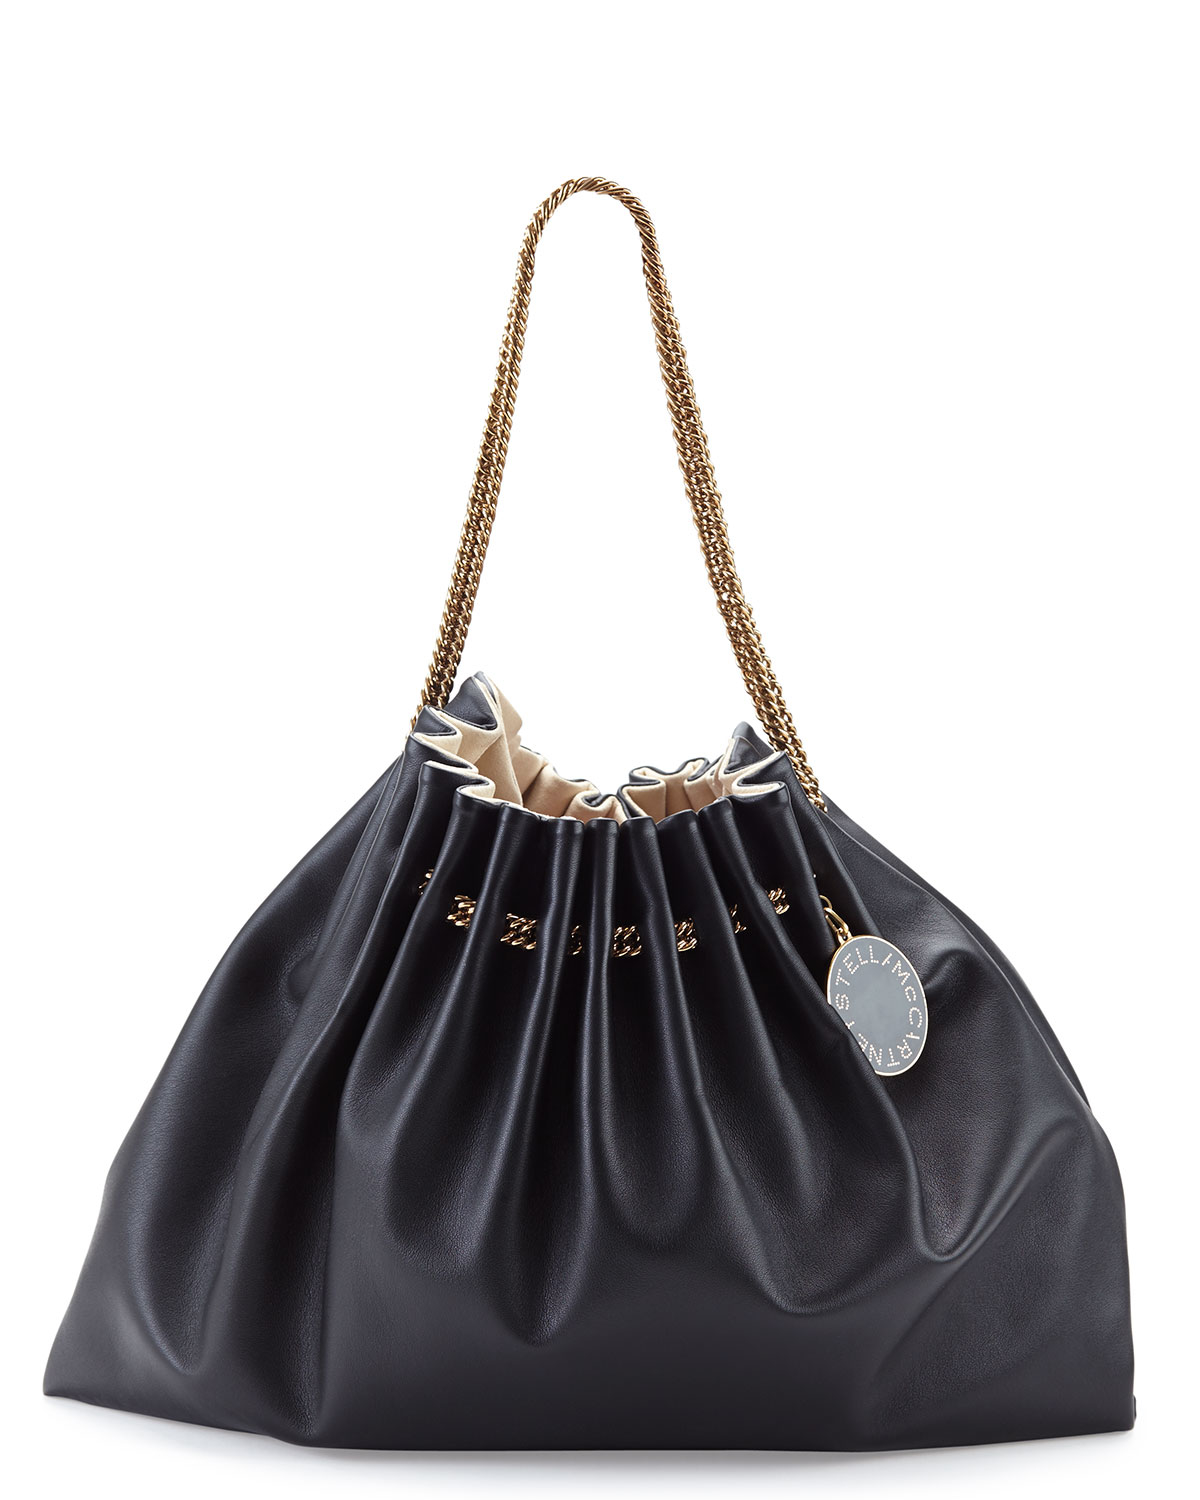 Lyst - Stella Mccartney Noma Chain-Strap Hobo Bag in Black